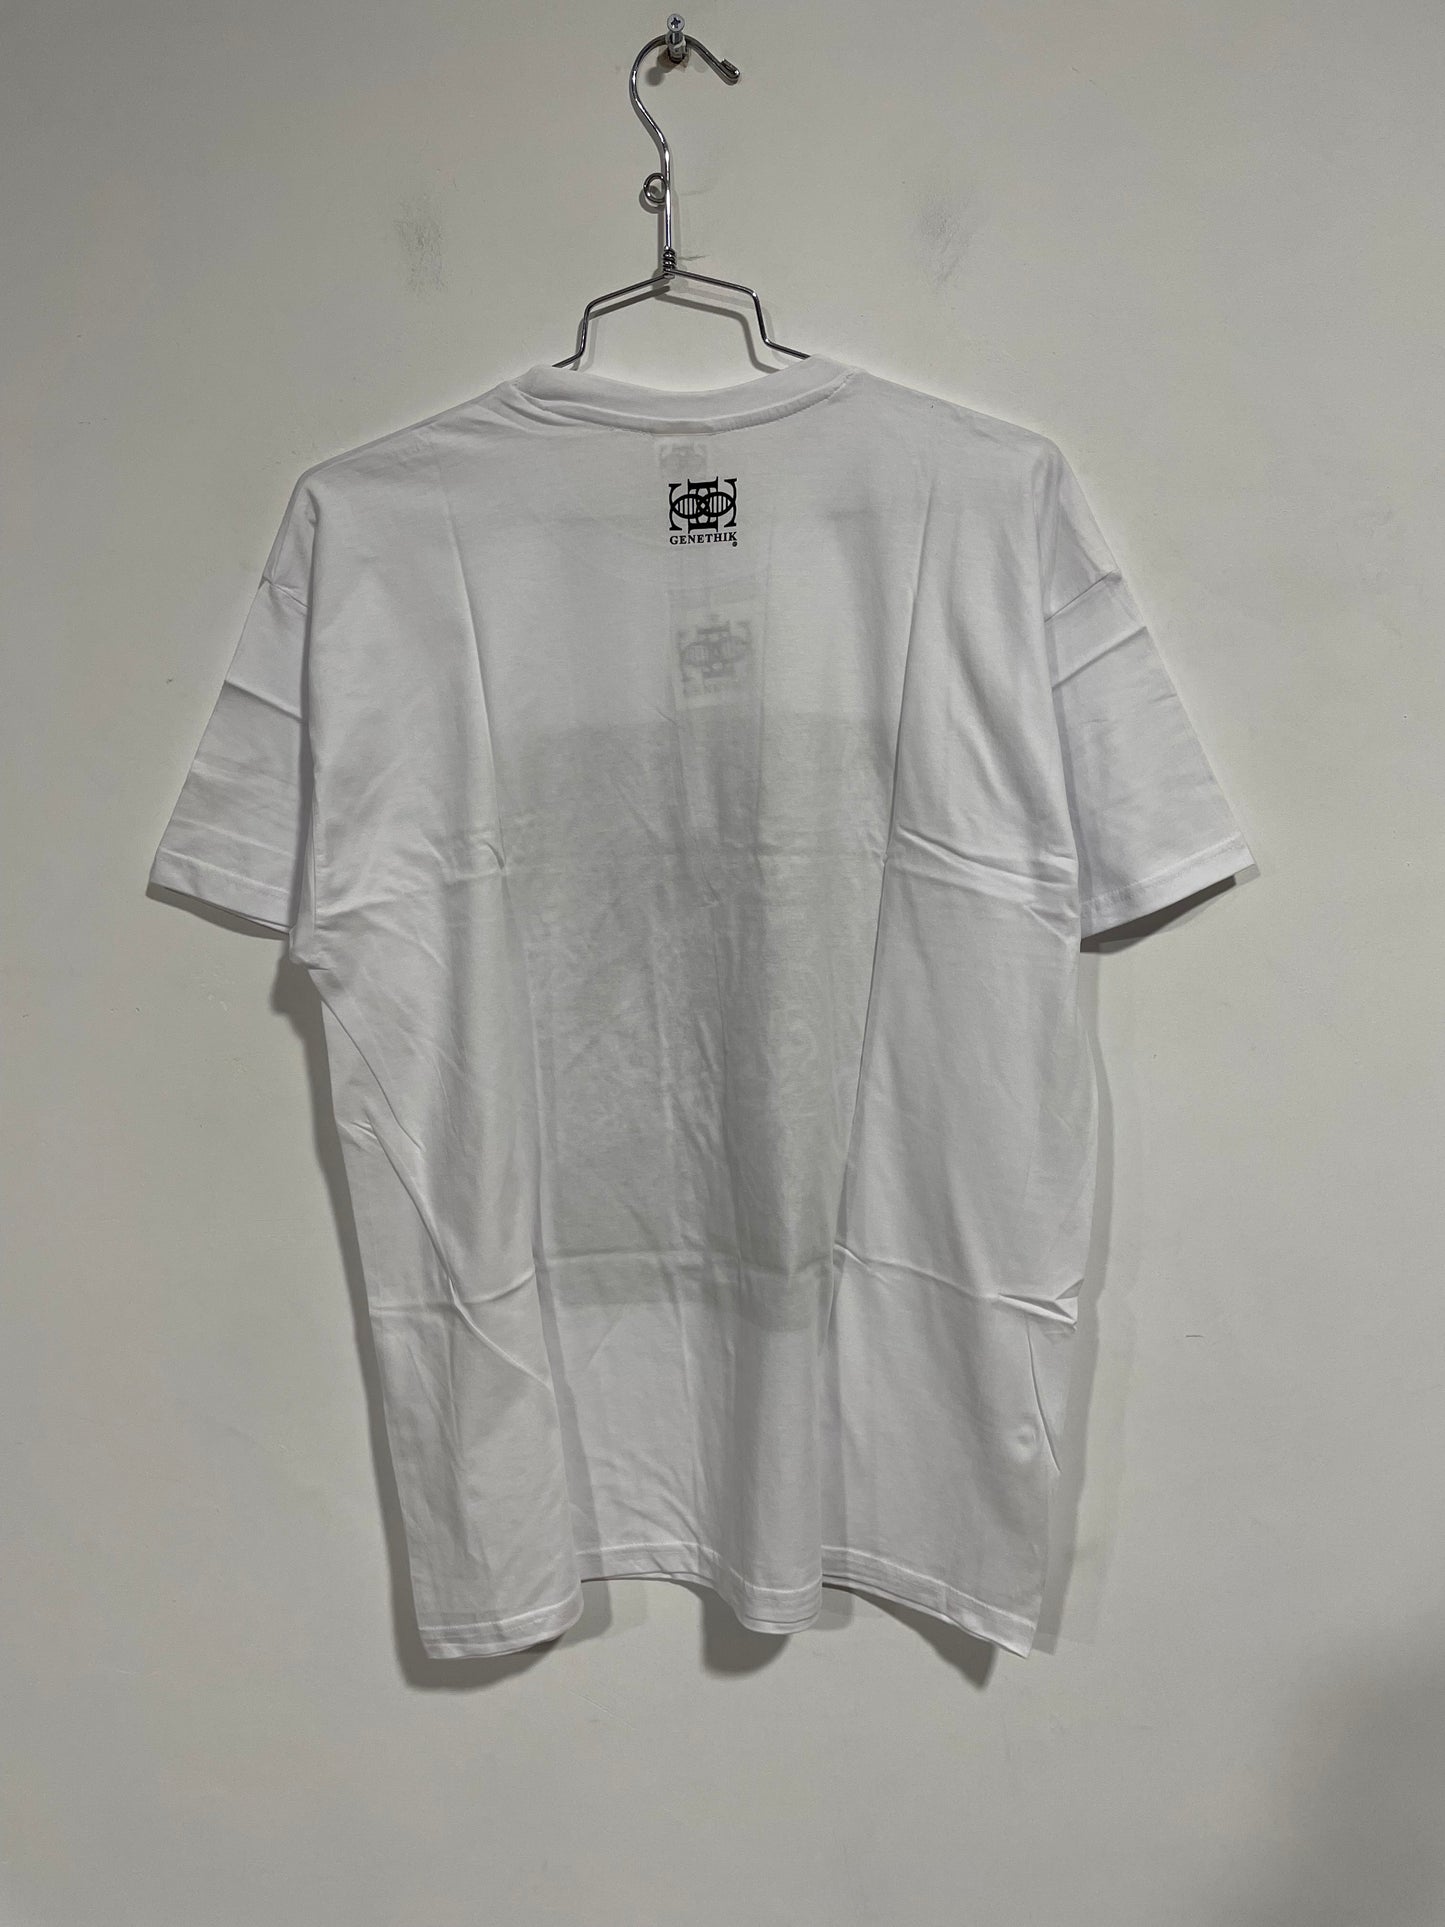 T shirt vecchia collezione Genethik Gufo Bianco